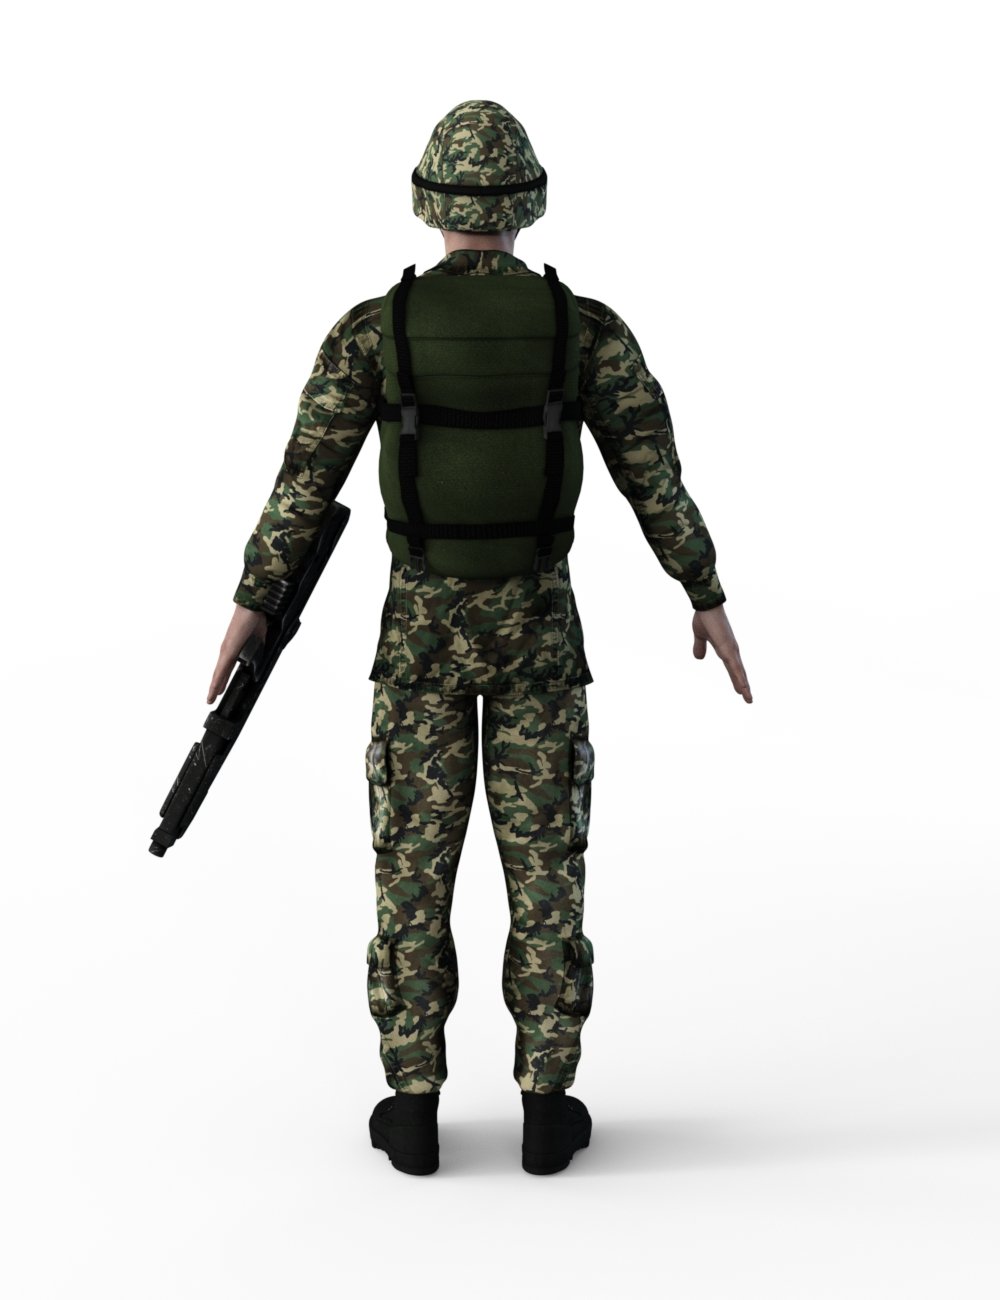 FBX- Lee Army Uniform by: Paleo, 3D Models by Daz 3D